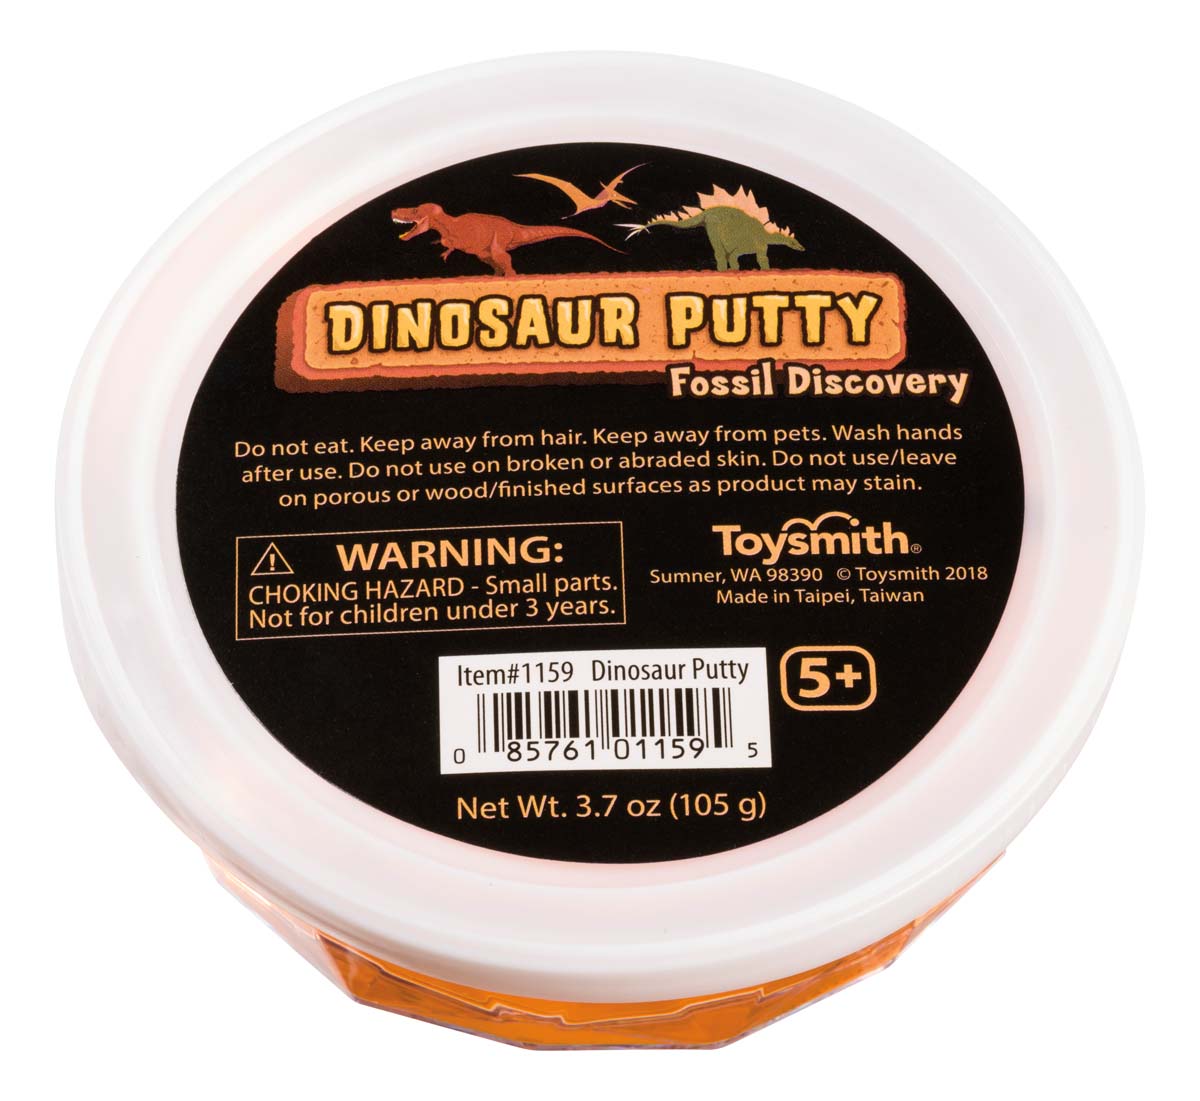 Dinosaur Putty container